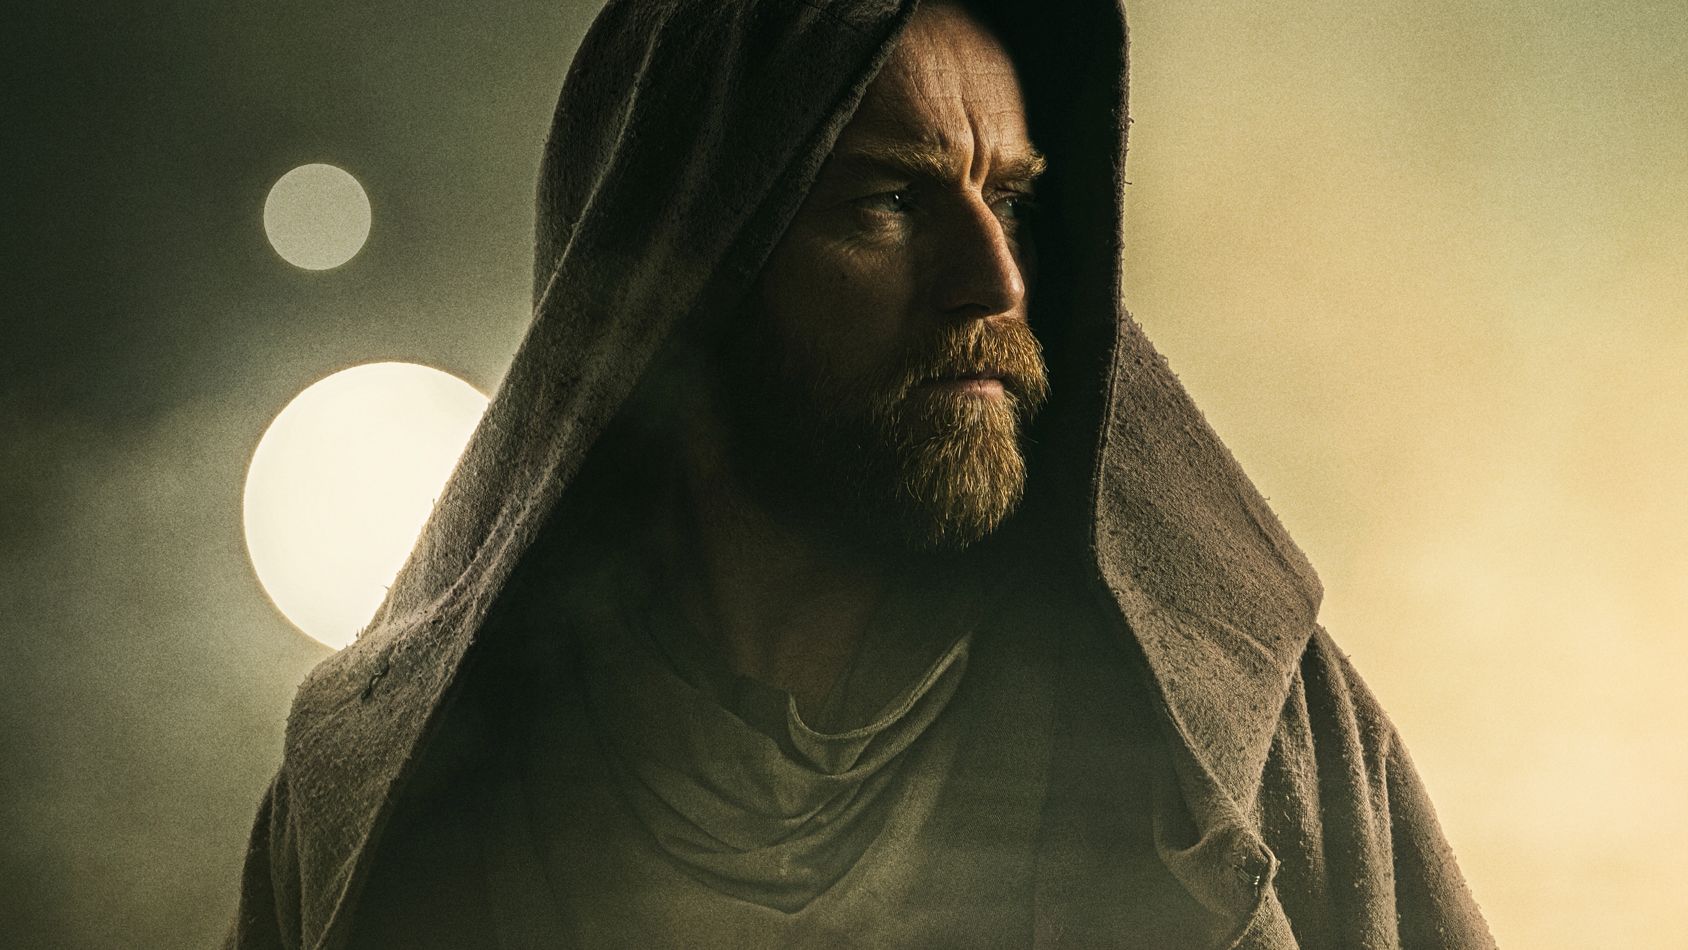 ¿A qué hora se estrena “Obi-Wan Kenobi” en Disney+?